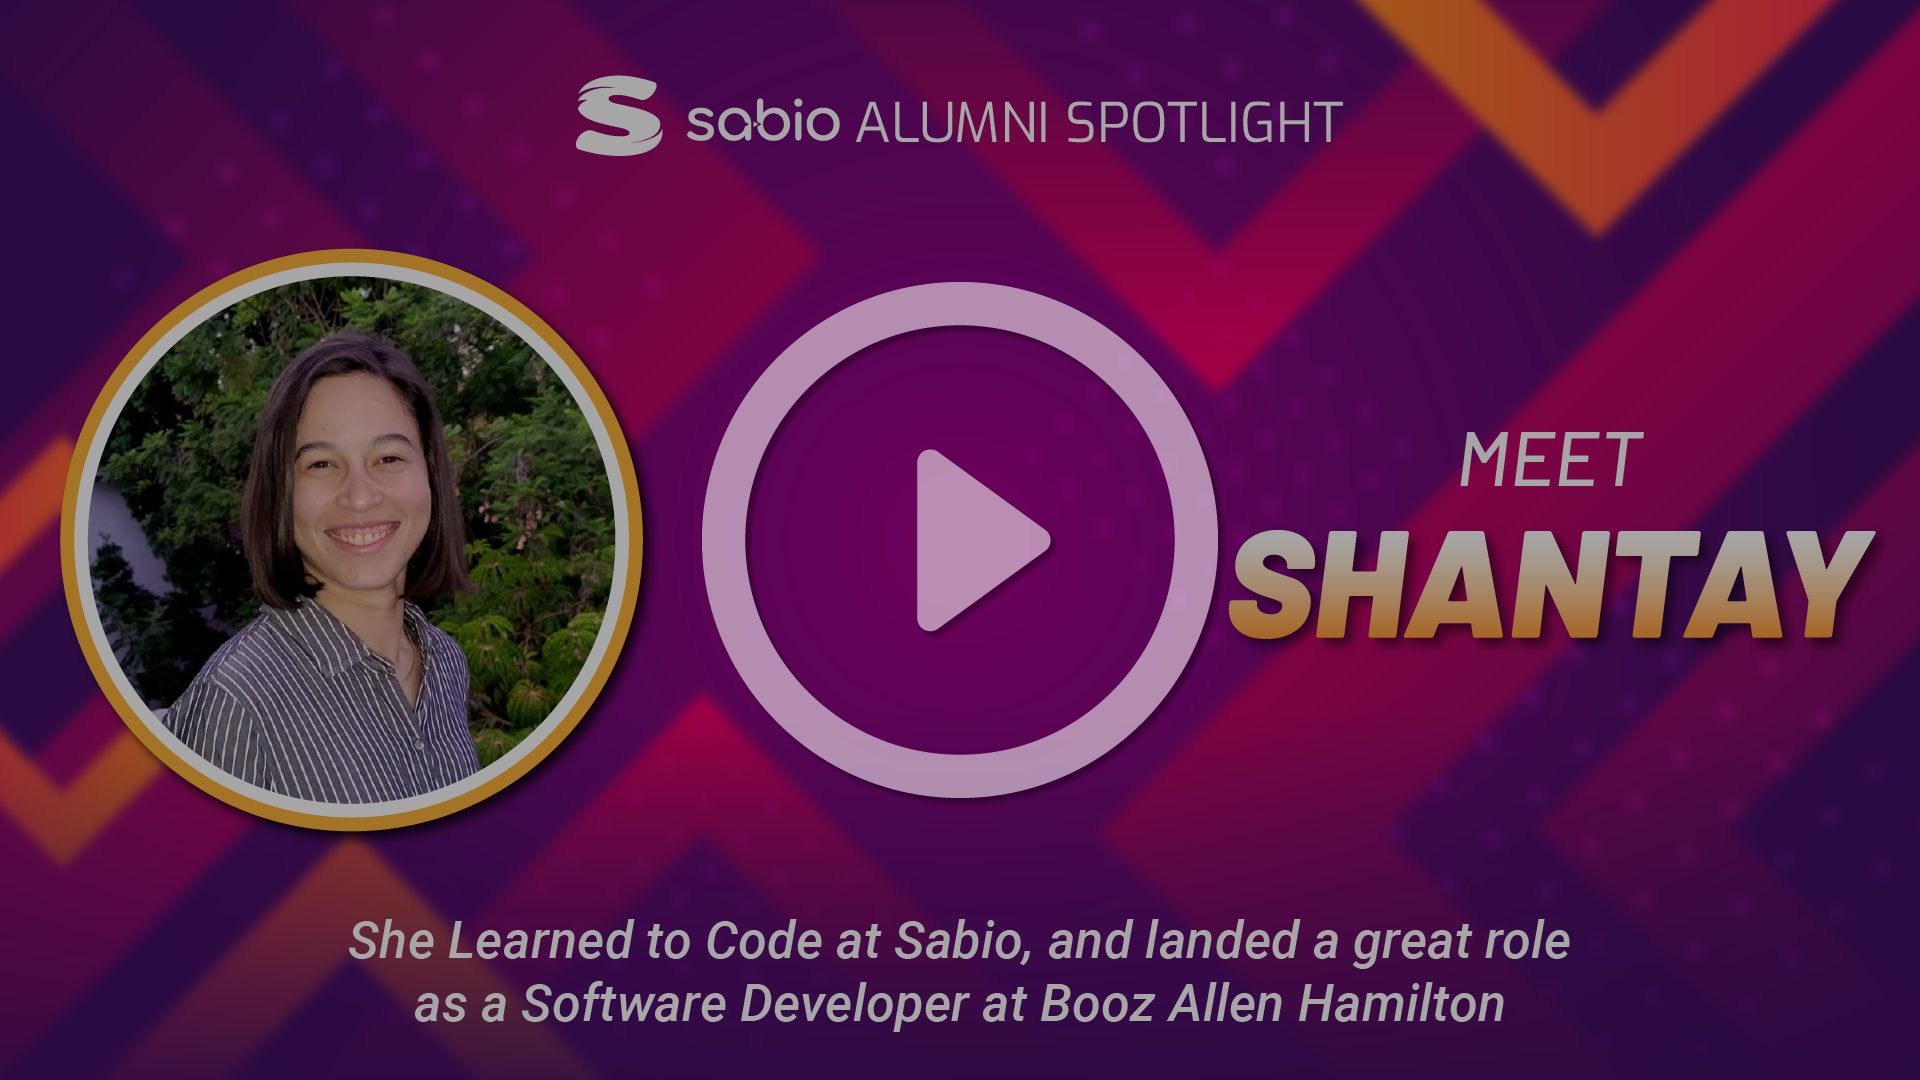 Sabio Alumni Spotlight: Shantay. Play symbol overlaid to the image.